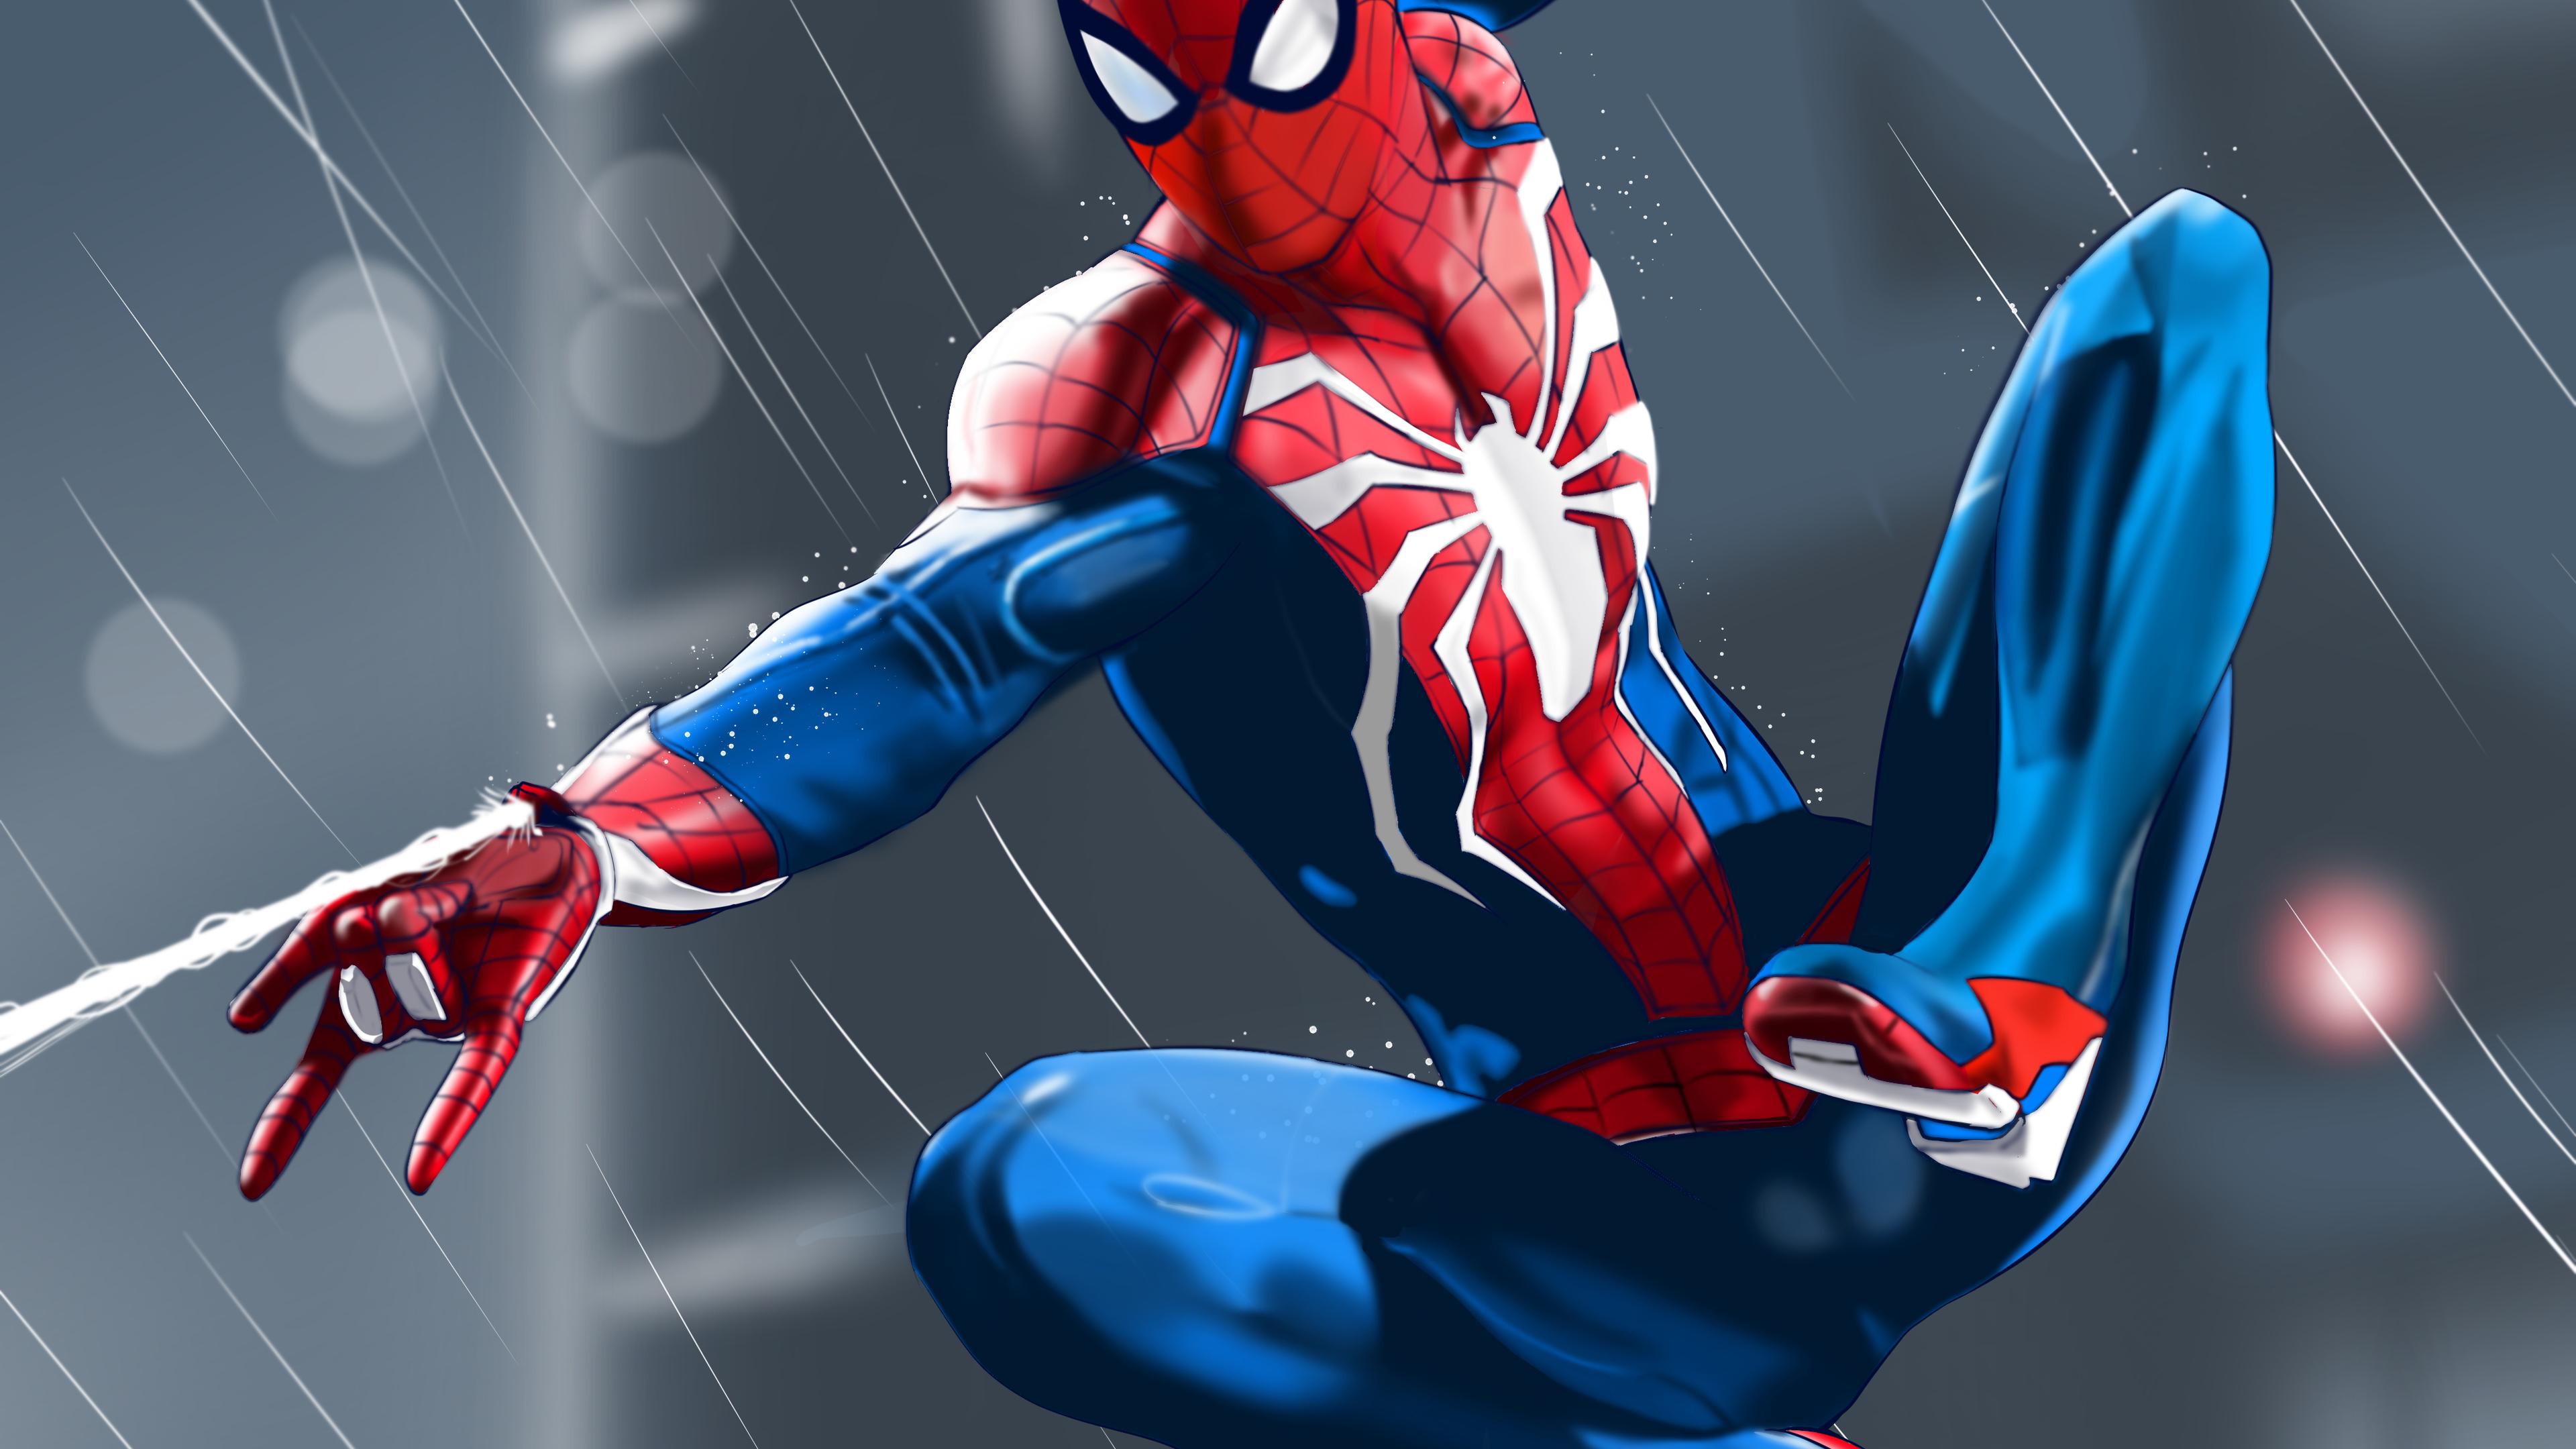 3840 x 2160 · jpeg - Spider Man 4k superheroes wallpapers, spiderman wallpapers, hd ...